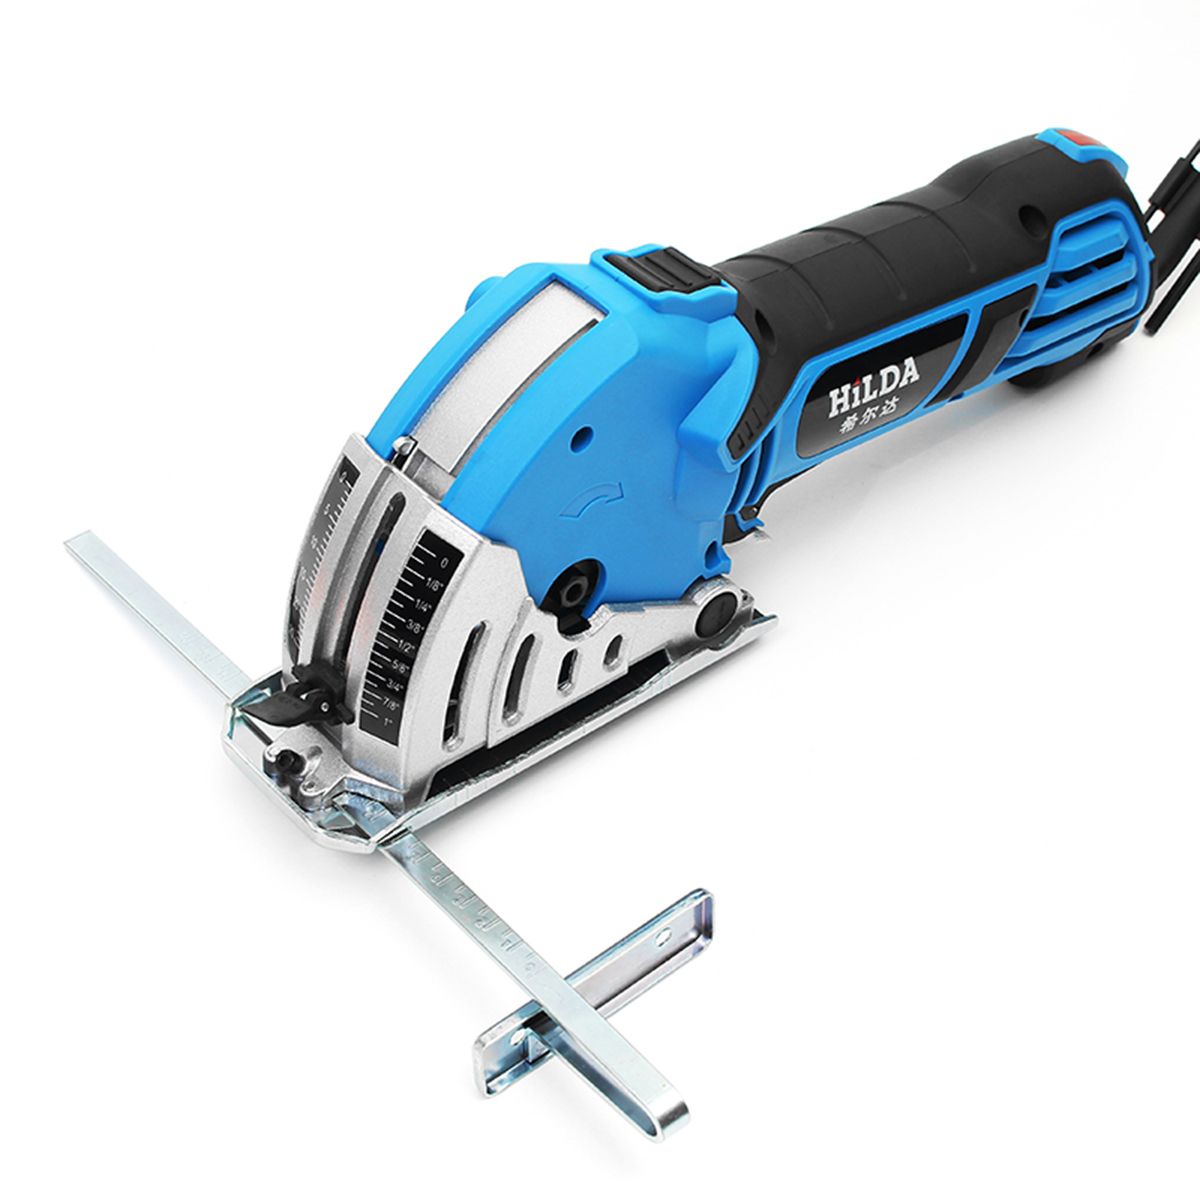 HILDA-JD3522C-500W-Electric-Mini-Circular-Saw-Power-Saws-Hand-Woodworking-Saw-1240902